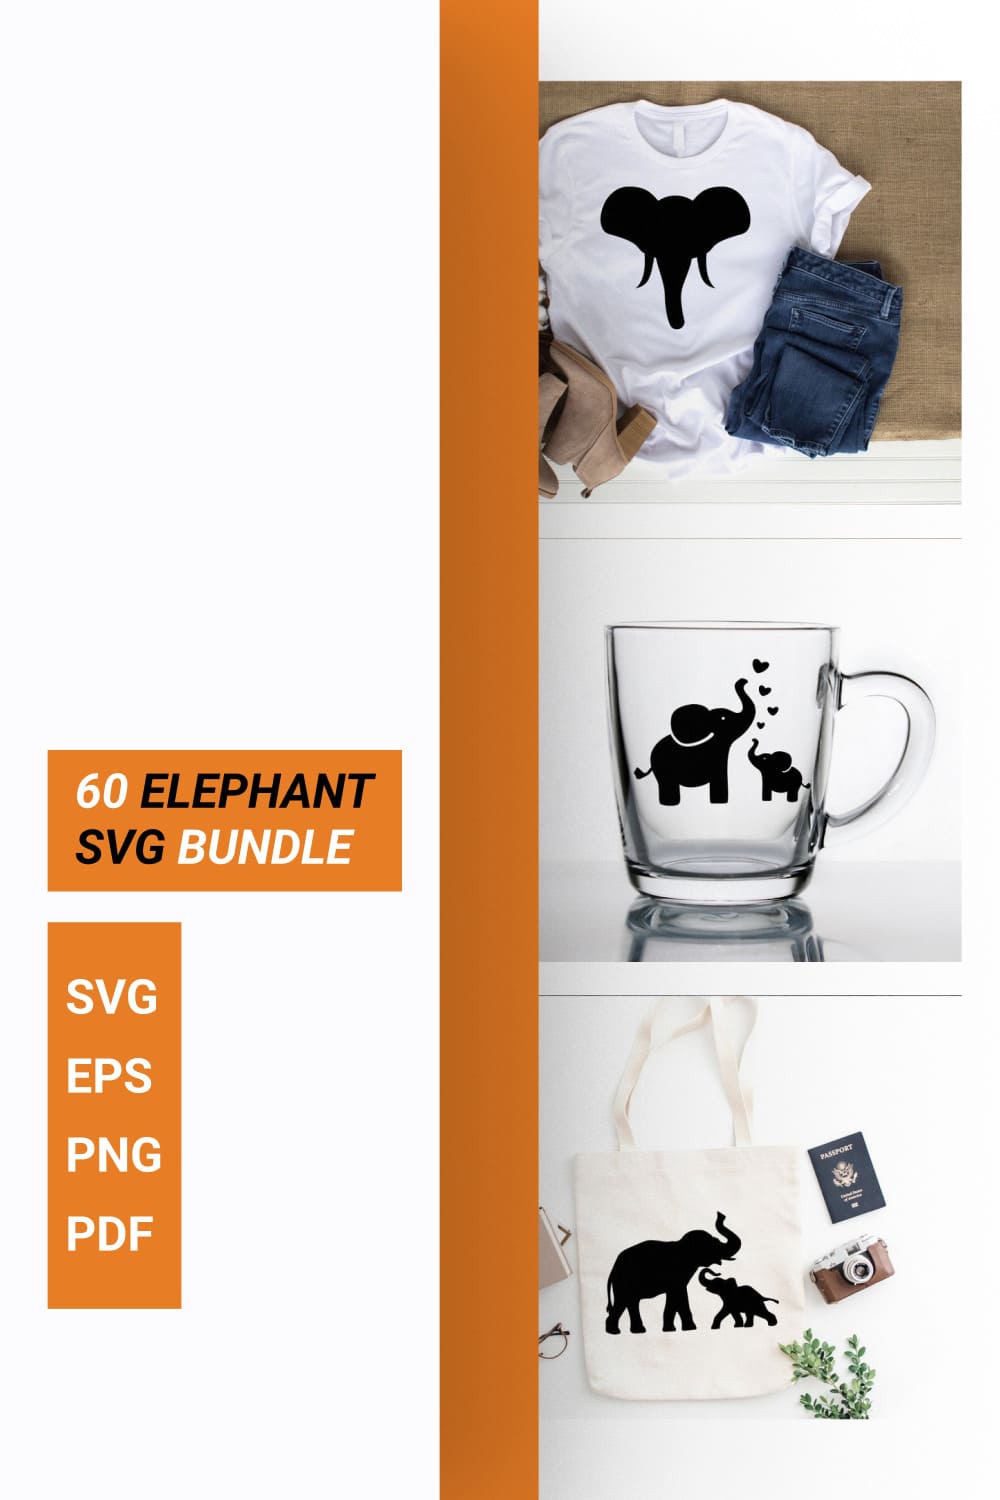 60 Elephant SVG Bundle Pinterest collage image.